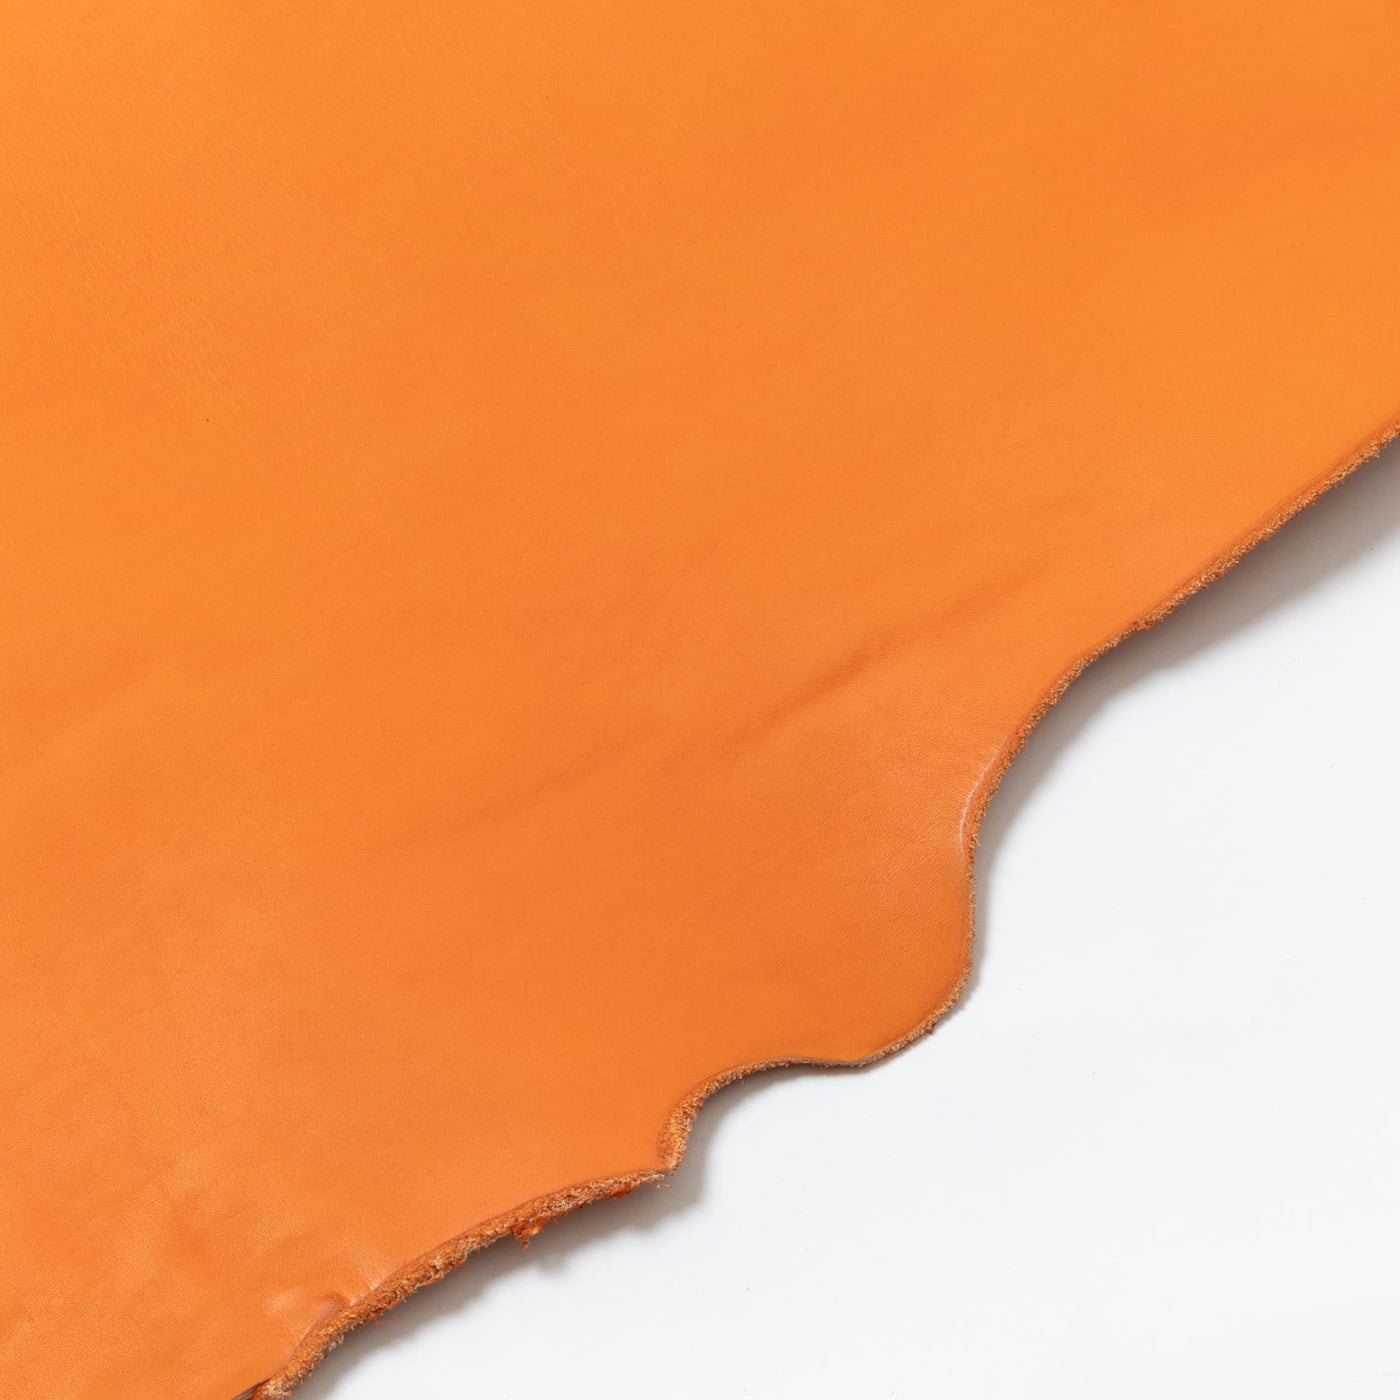 Tanned/smooth leather half-cut/orange